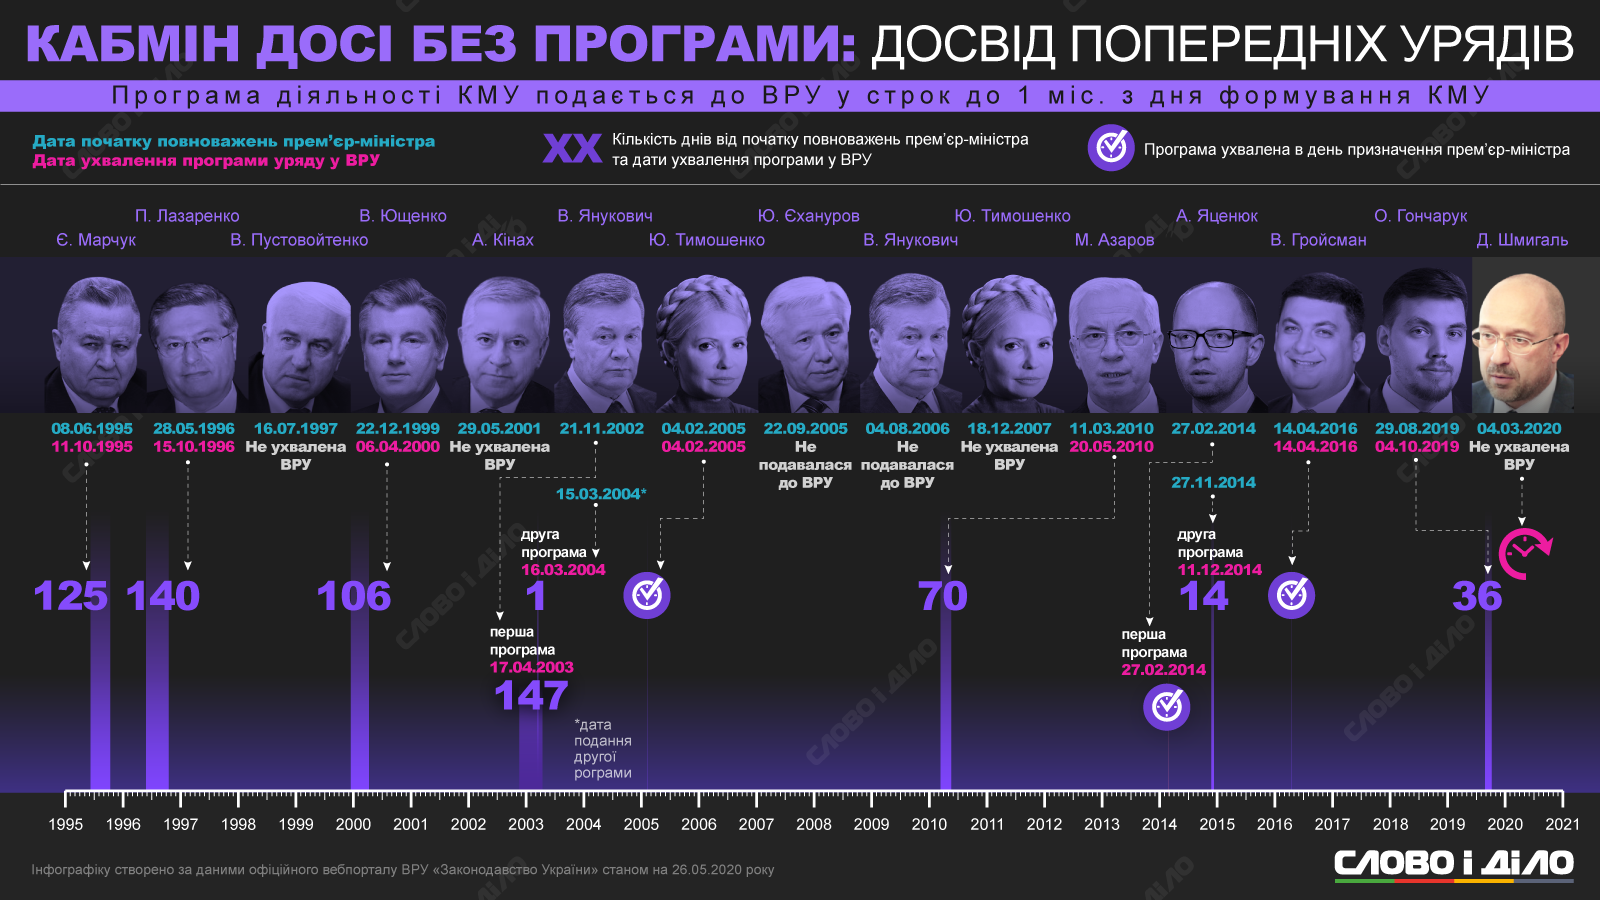 http://media.slovoidilo.ua/media/infographics/12/111674/111674-1_uk_origin.png